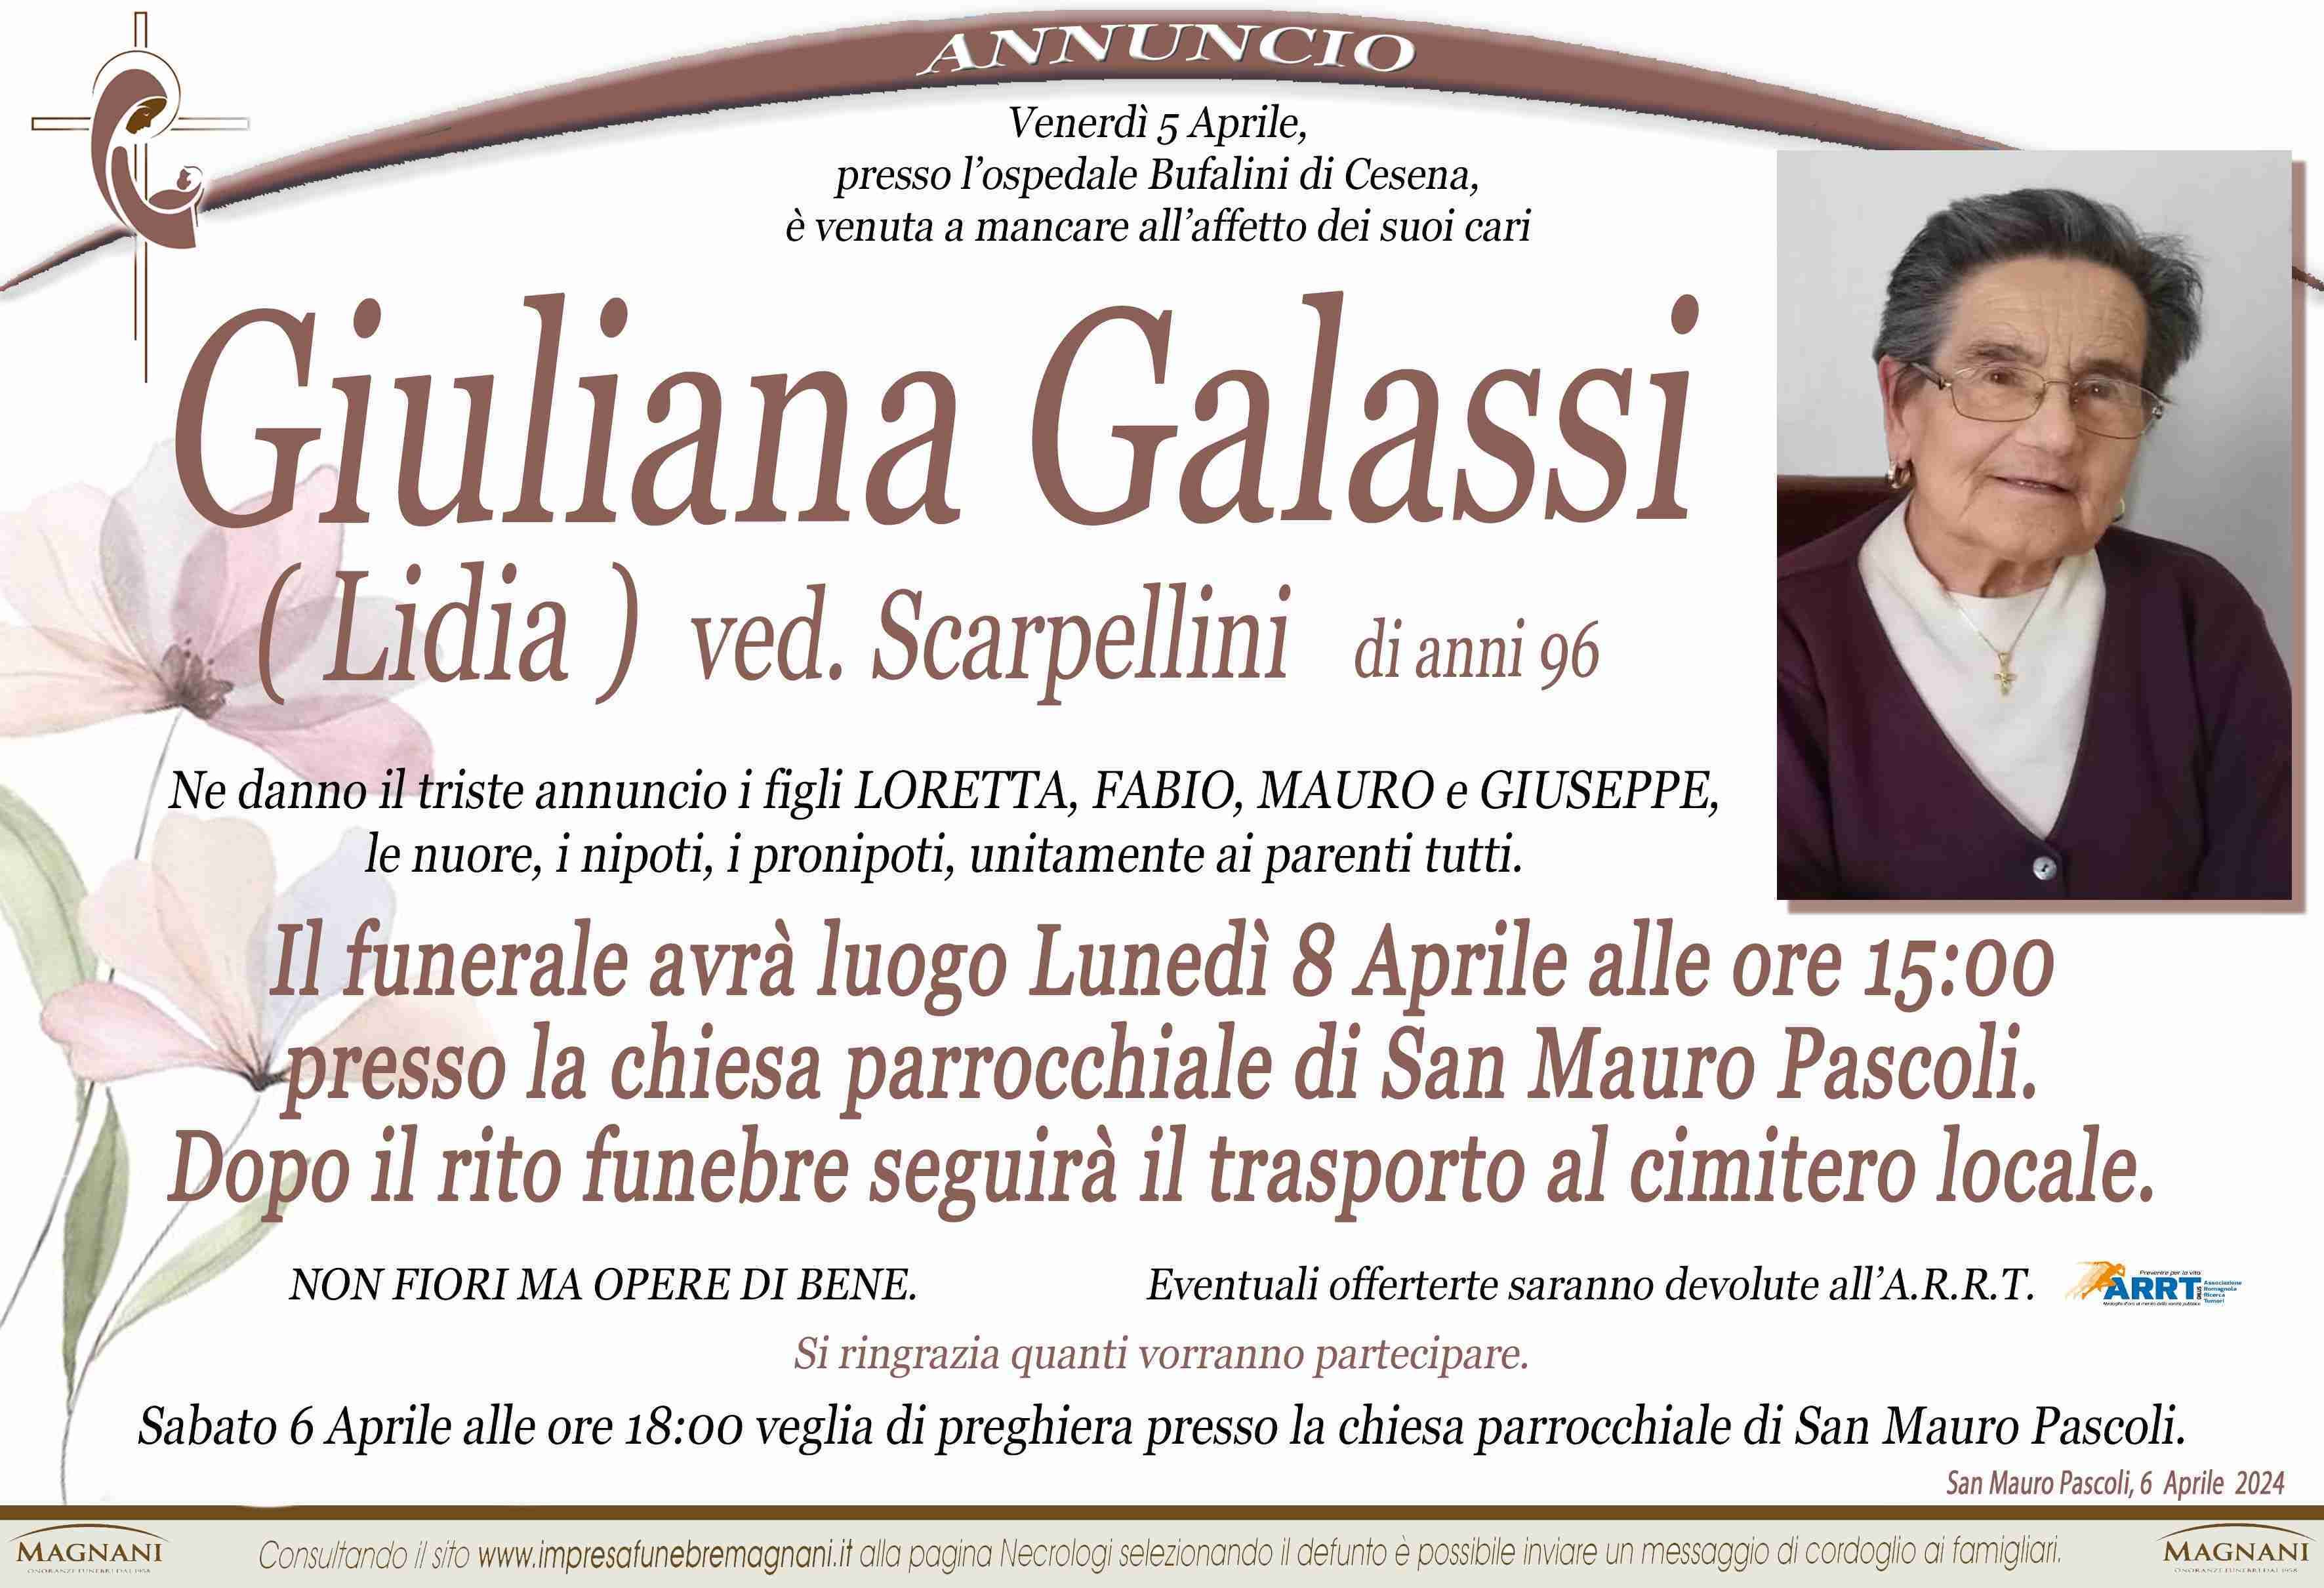 Giuliana (Lidia) Galassi